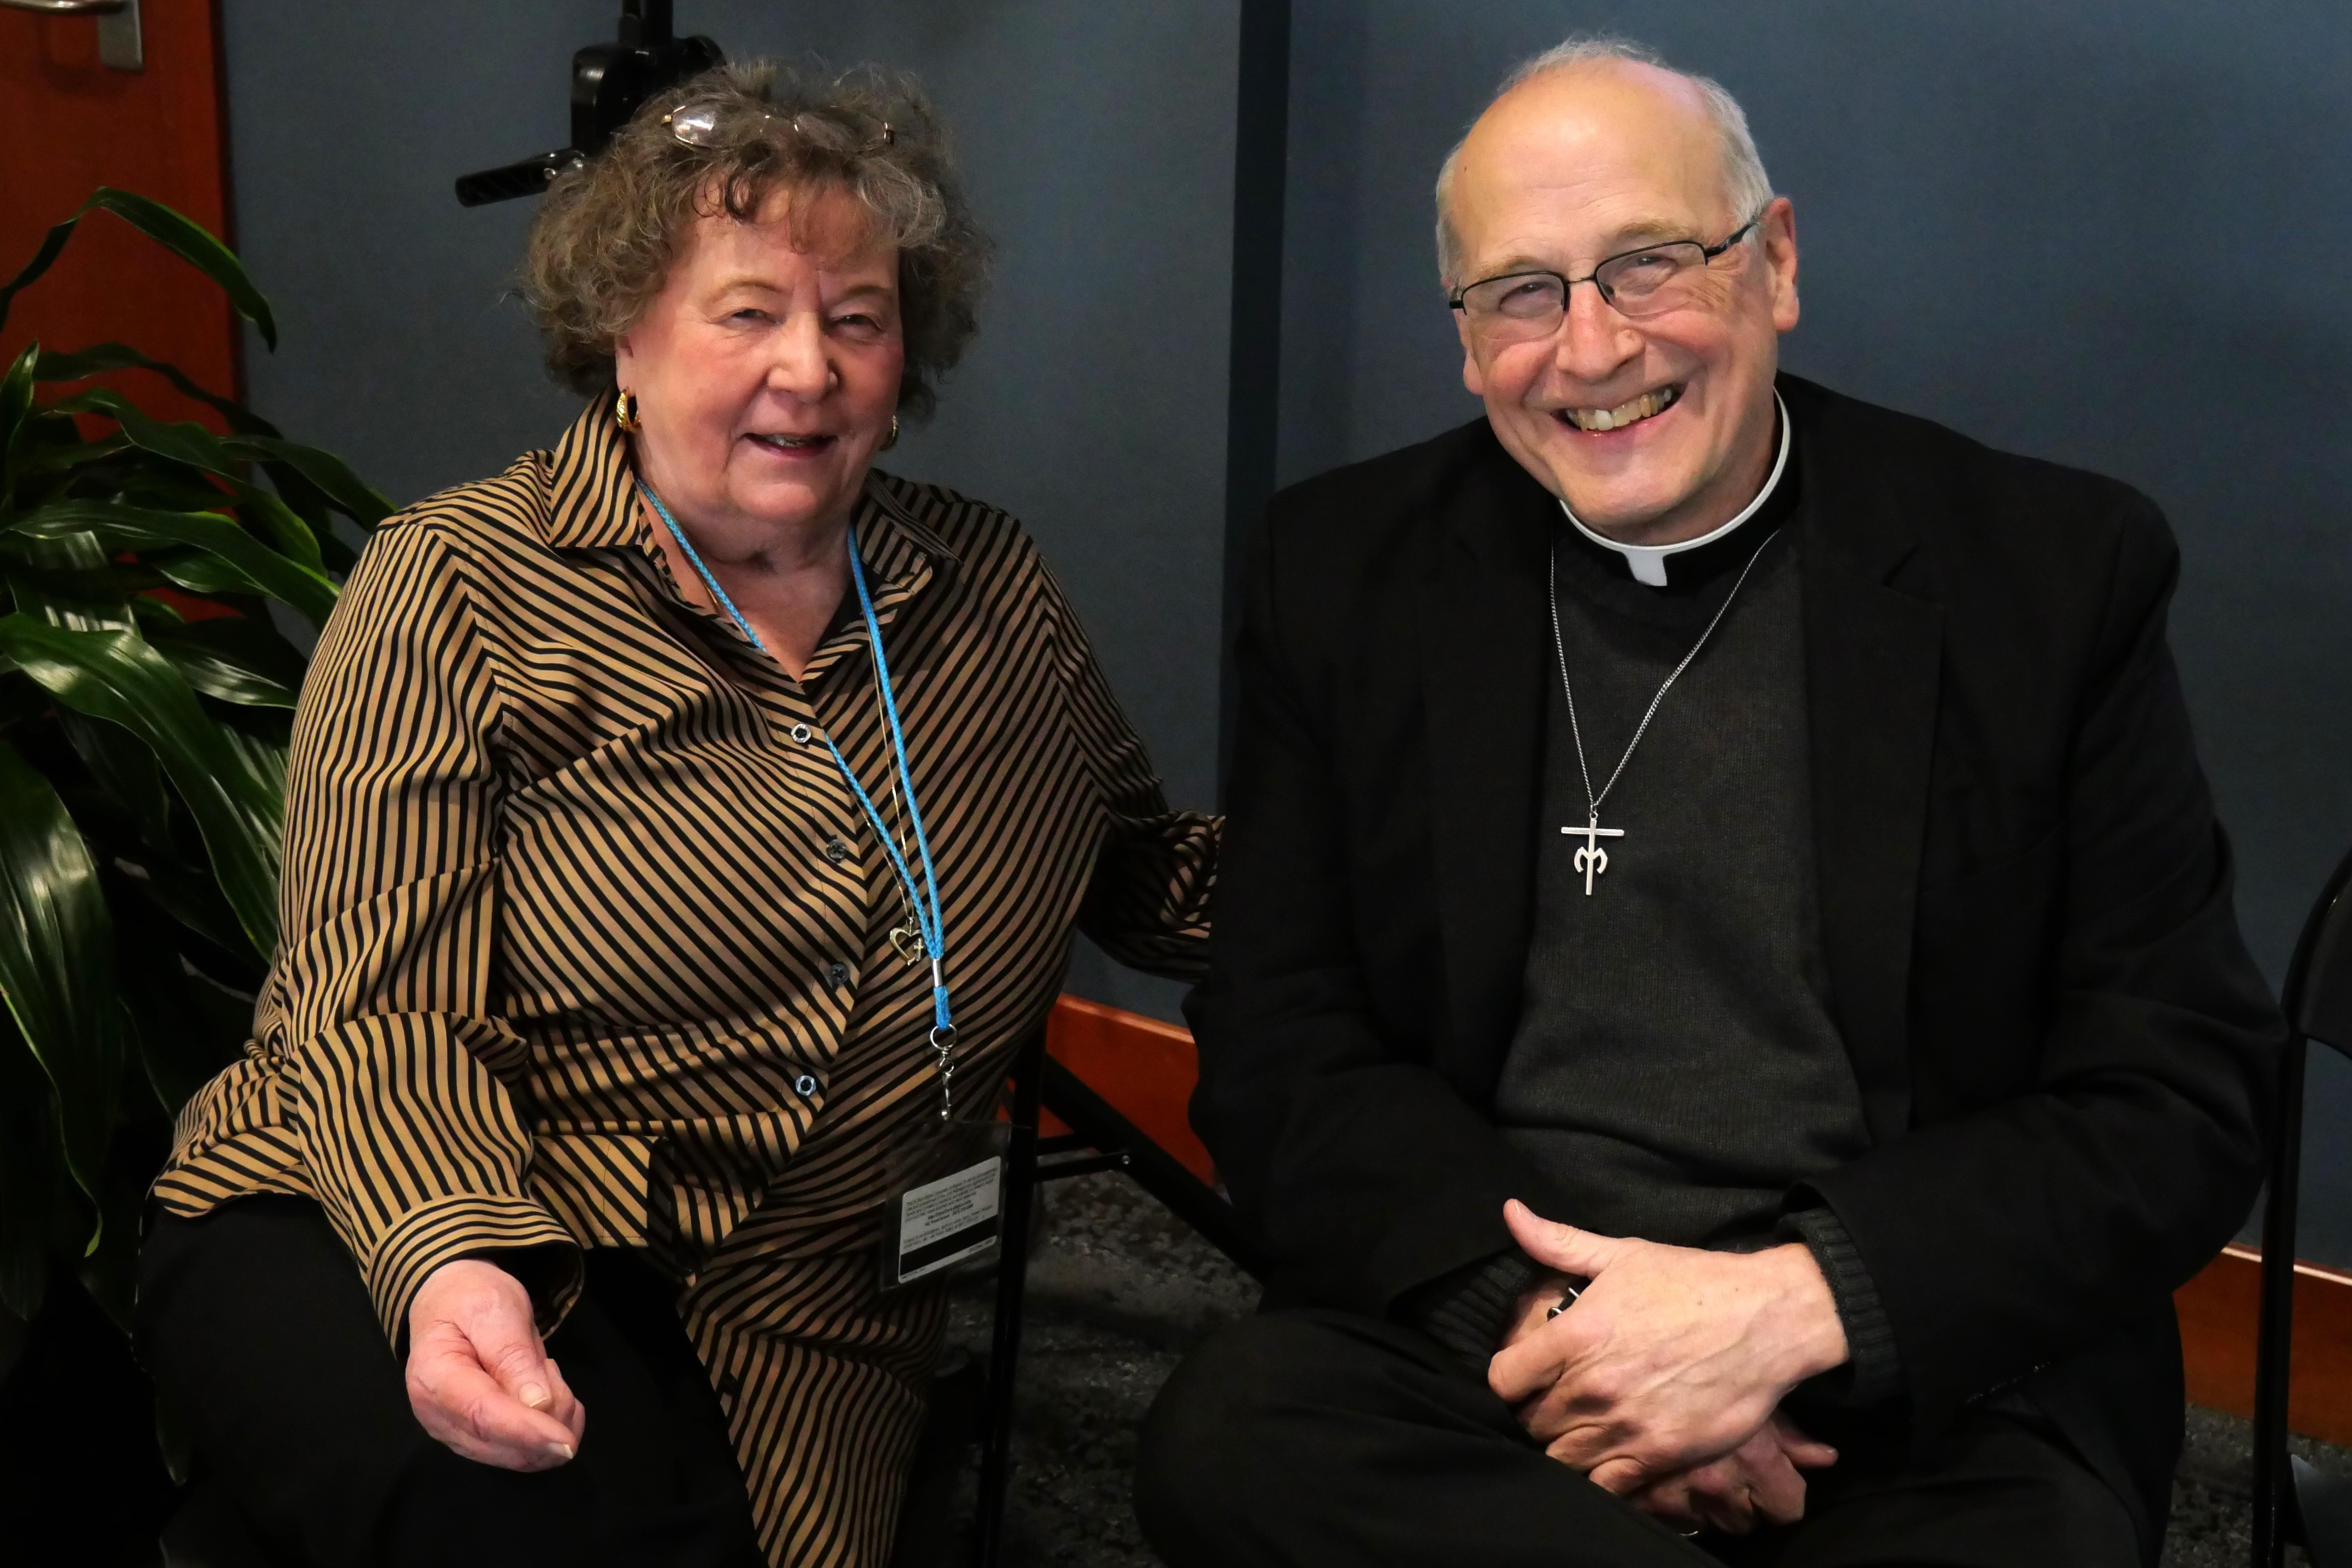 Sister Angela Ann Zukowski and Father Jim Fitz sitting together smiling